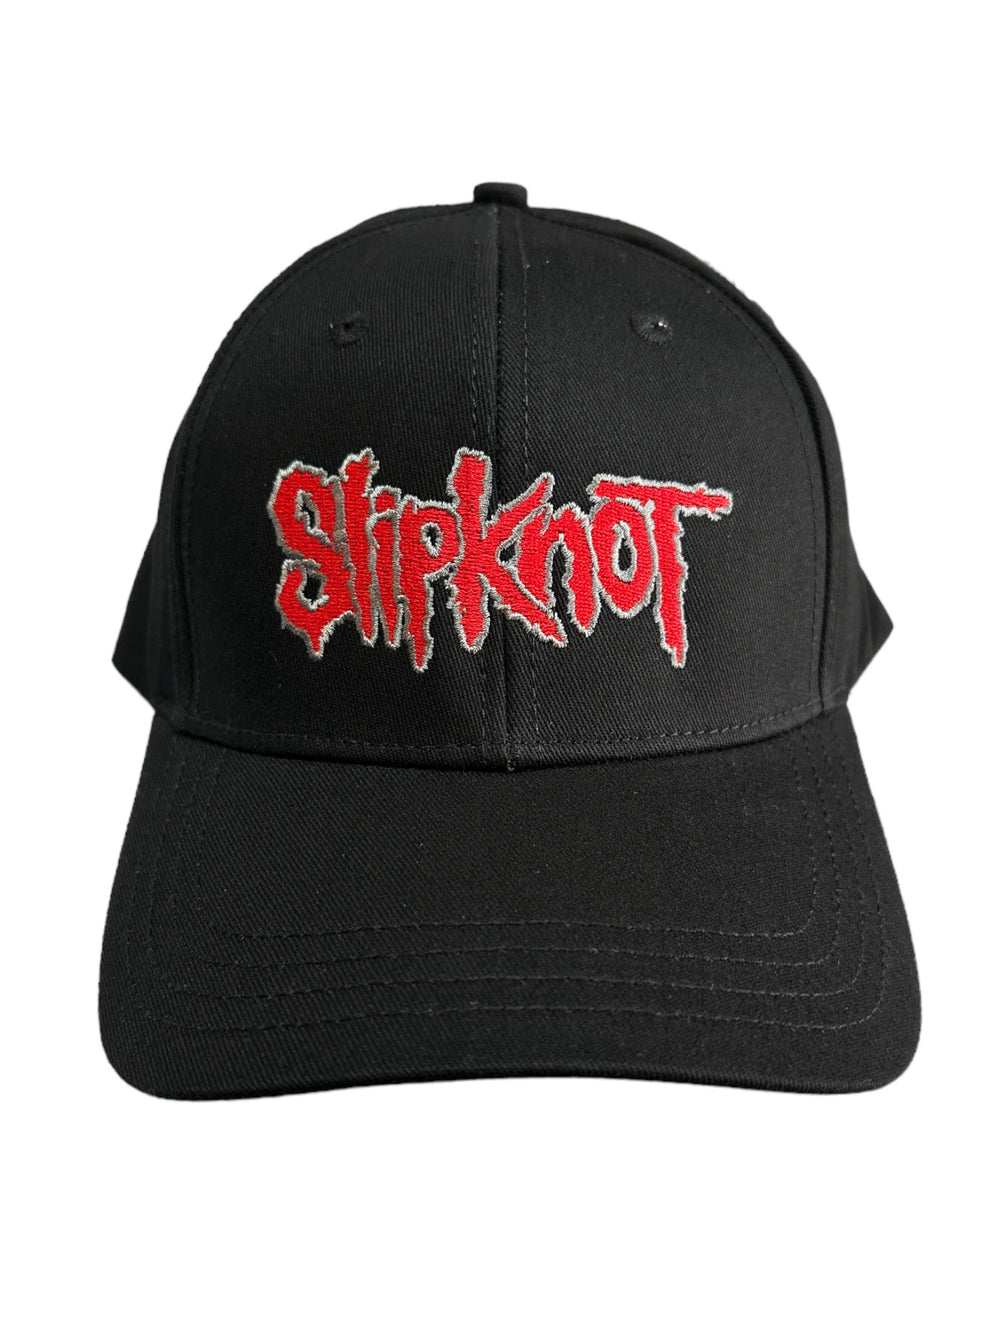 Slipknot Text Logo Official Embroidered Peak Cap Brand New